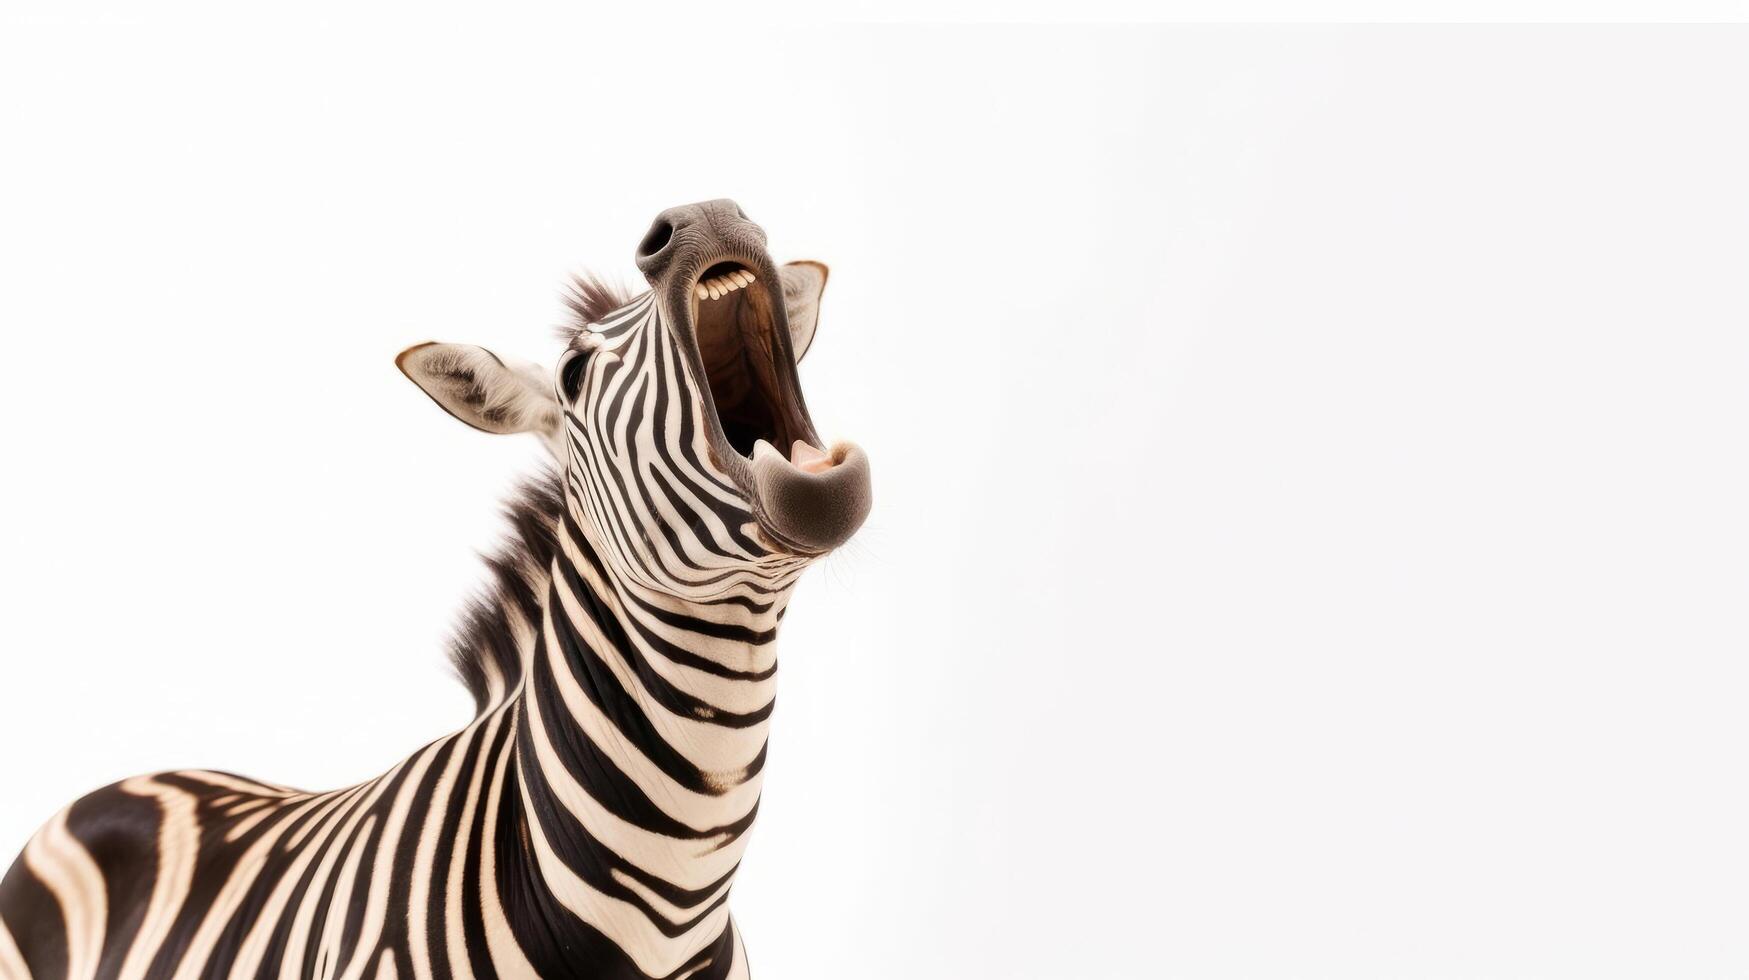 Funny Zebra on white background. Illustration photo